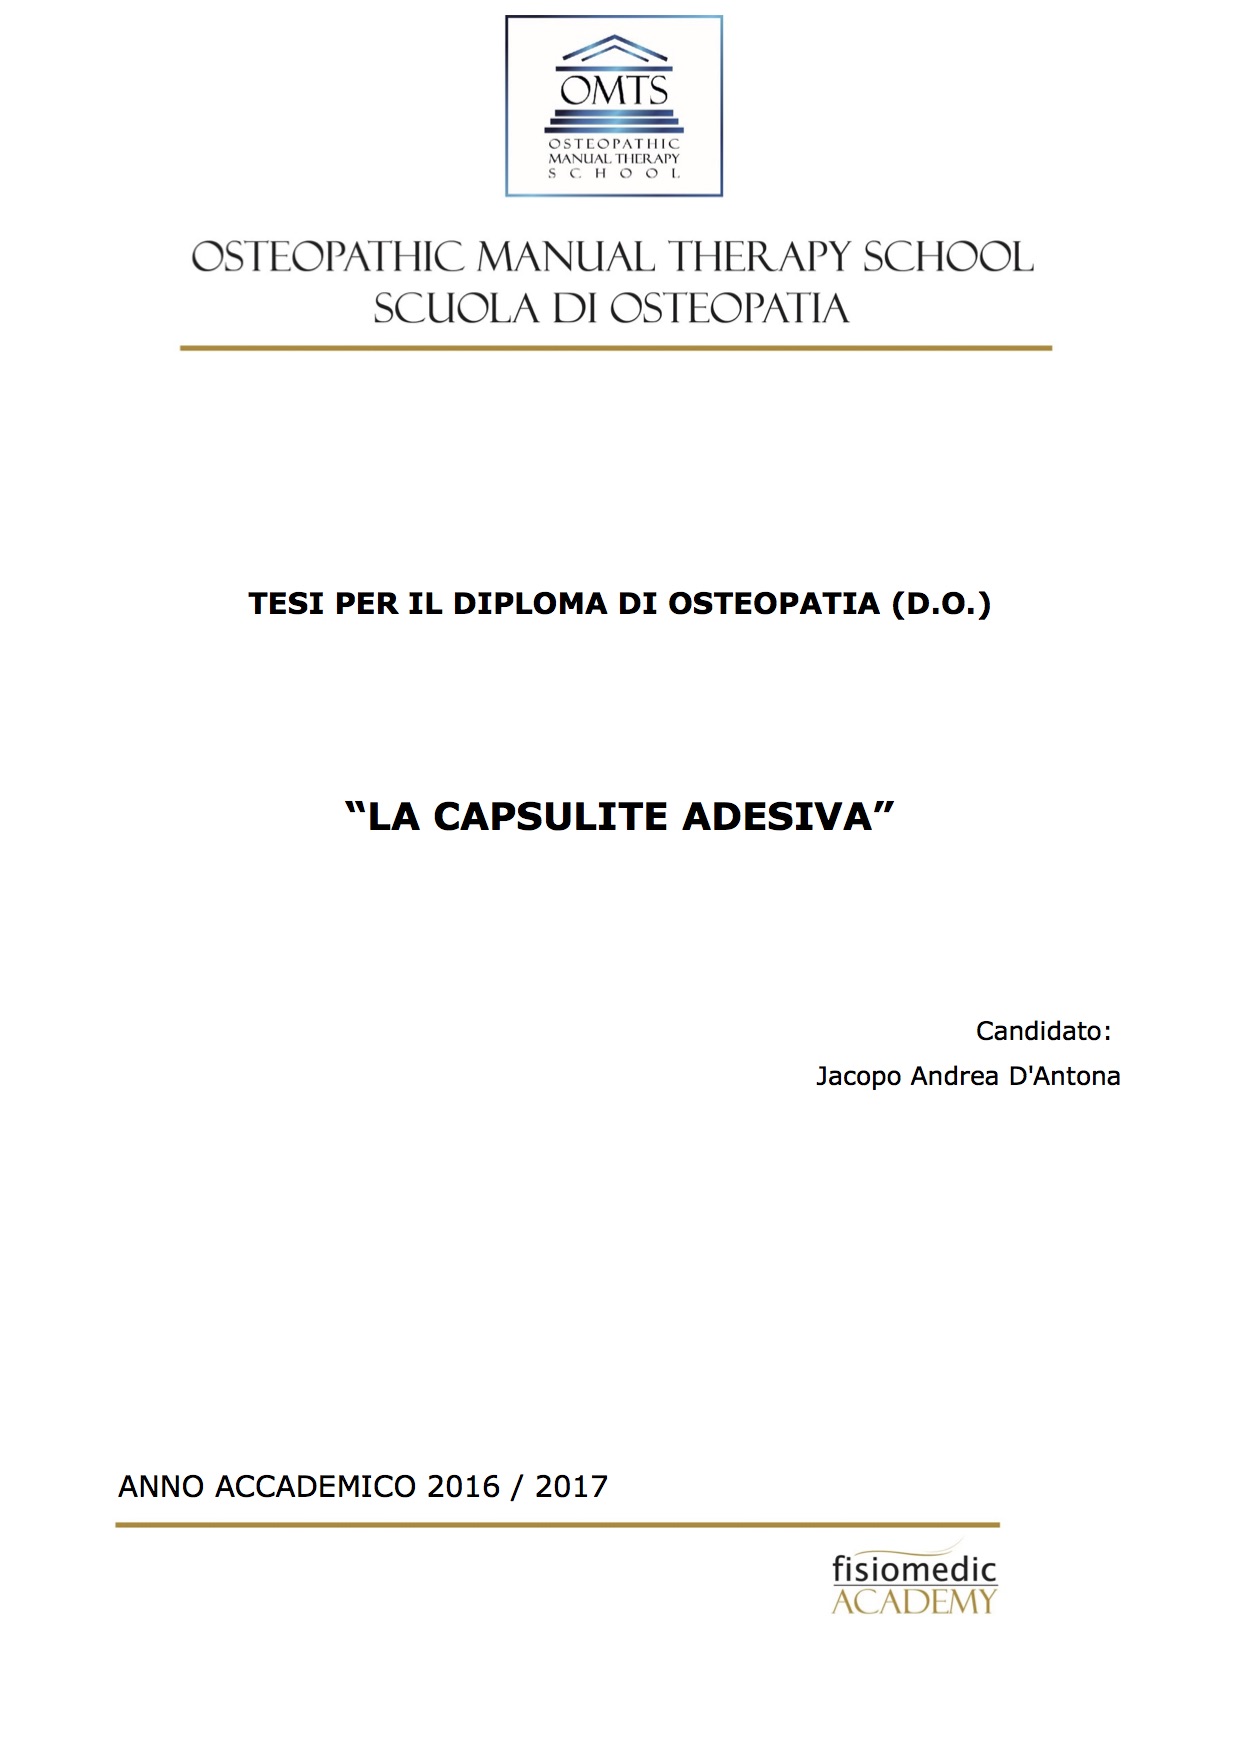 Jacopo D Antona Tesi Diploma Osteopatia 2017